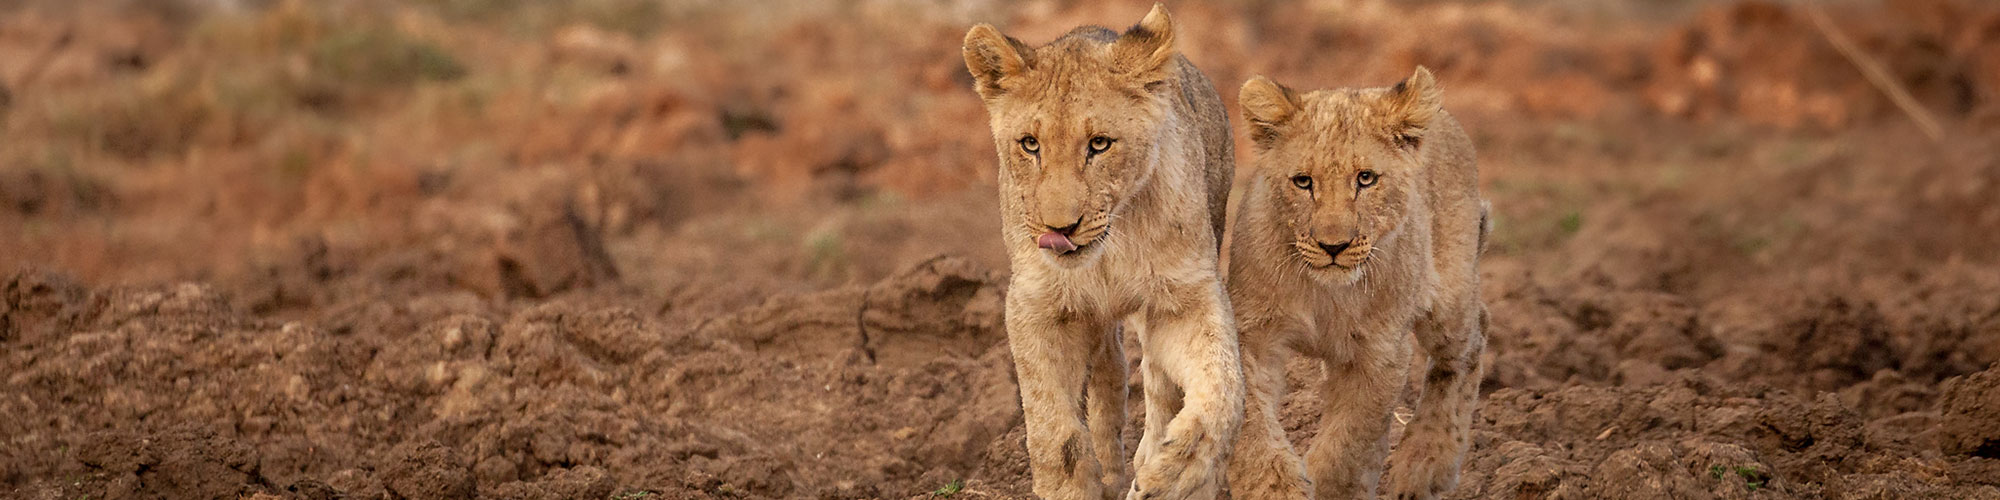 Lions Madikwe photo safari